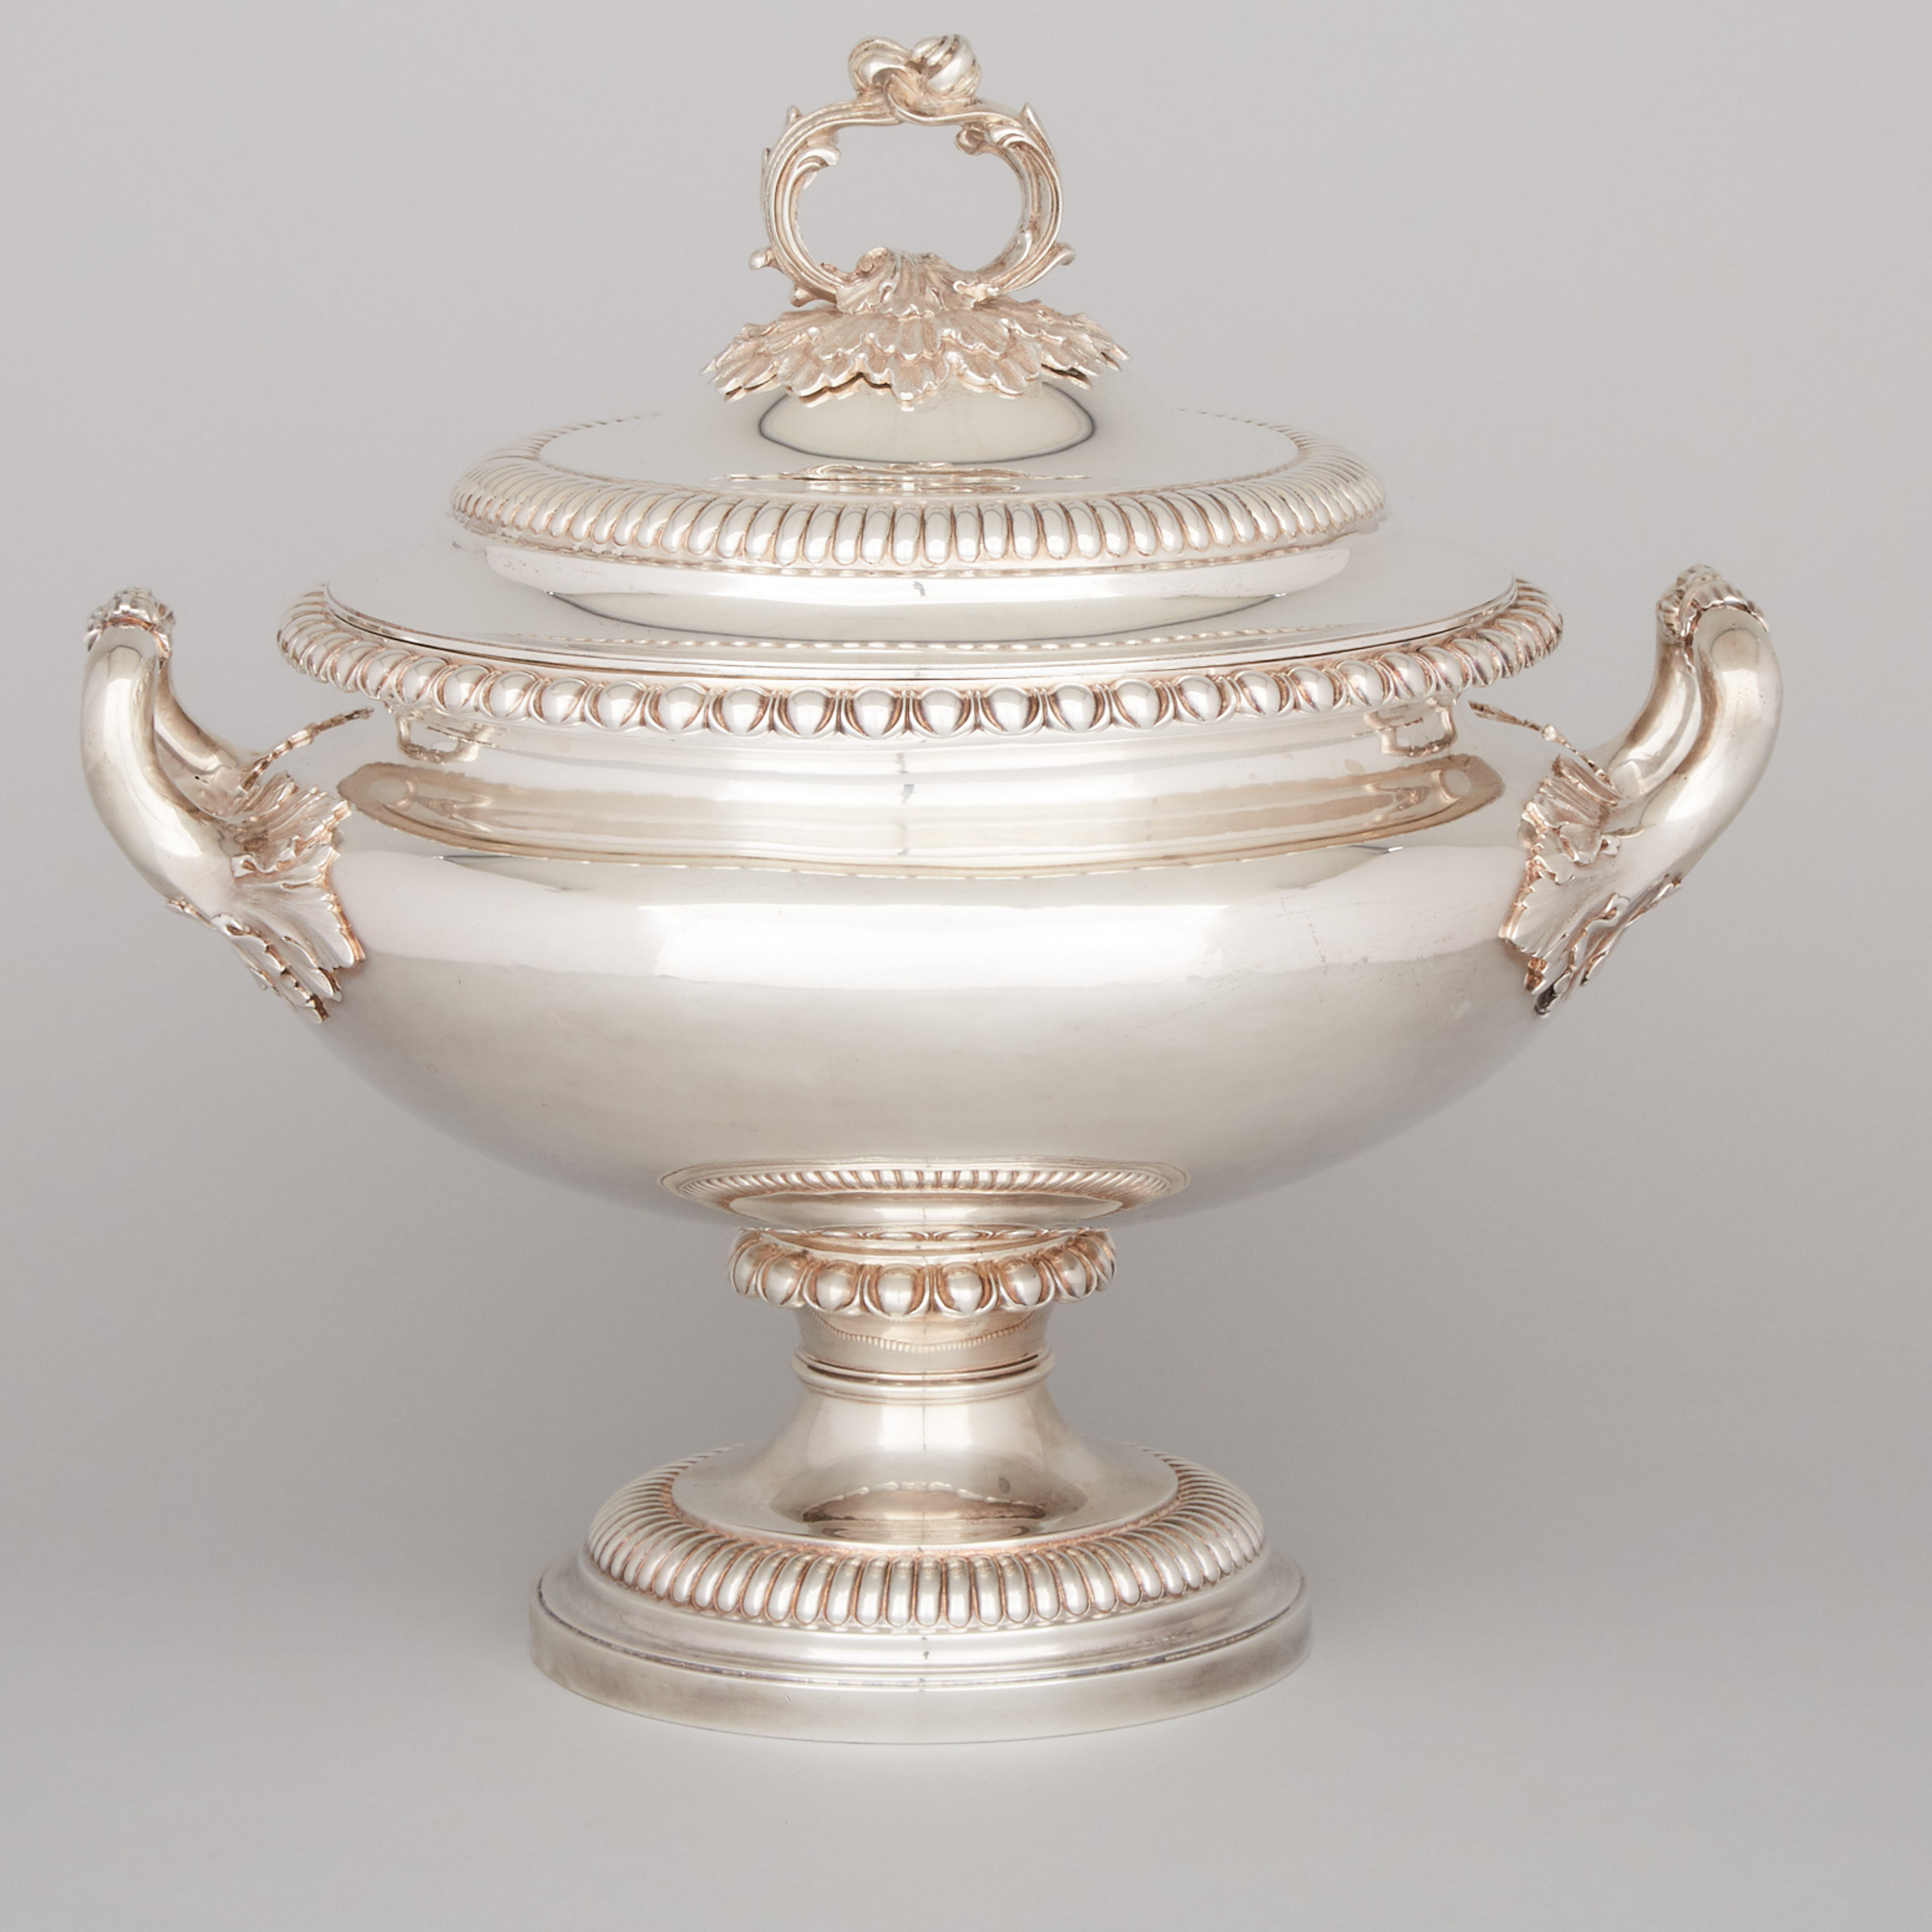 Large Victorian Silver Covered Soup Tureen, James Charles Edington, London, 1838